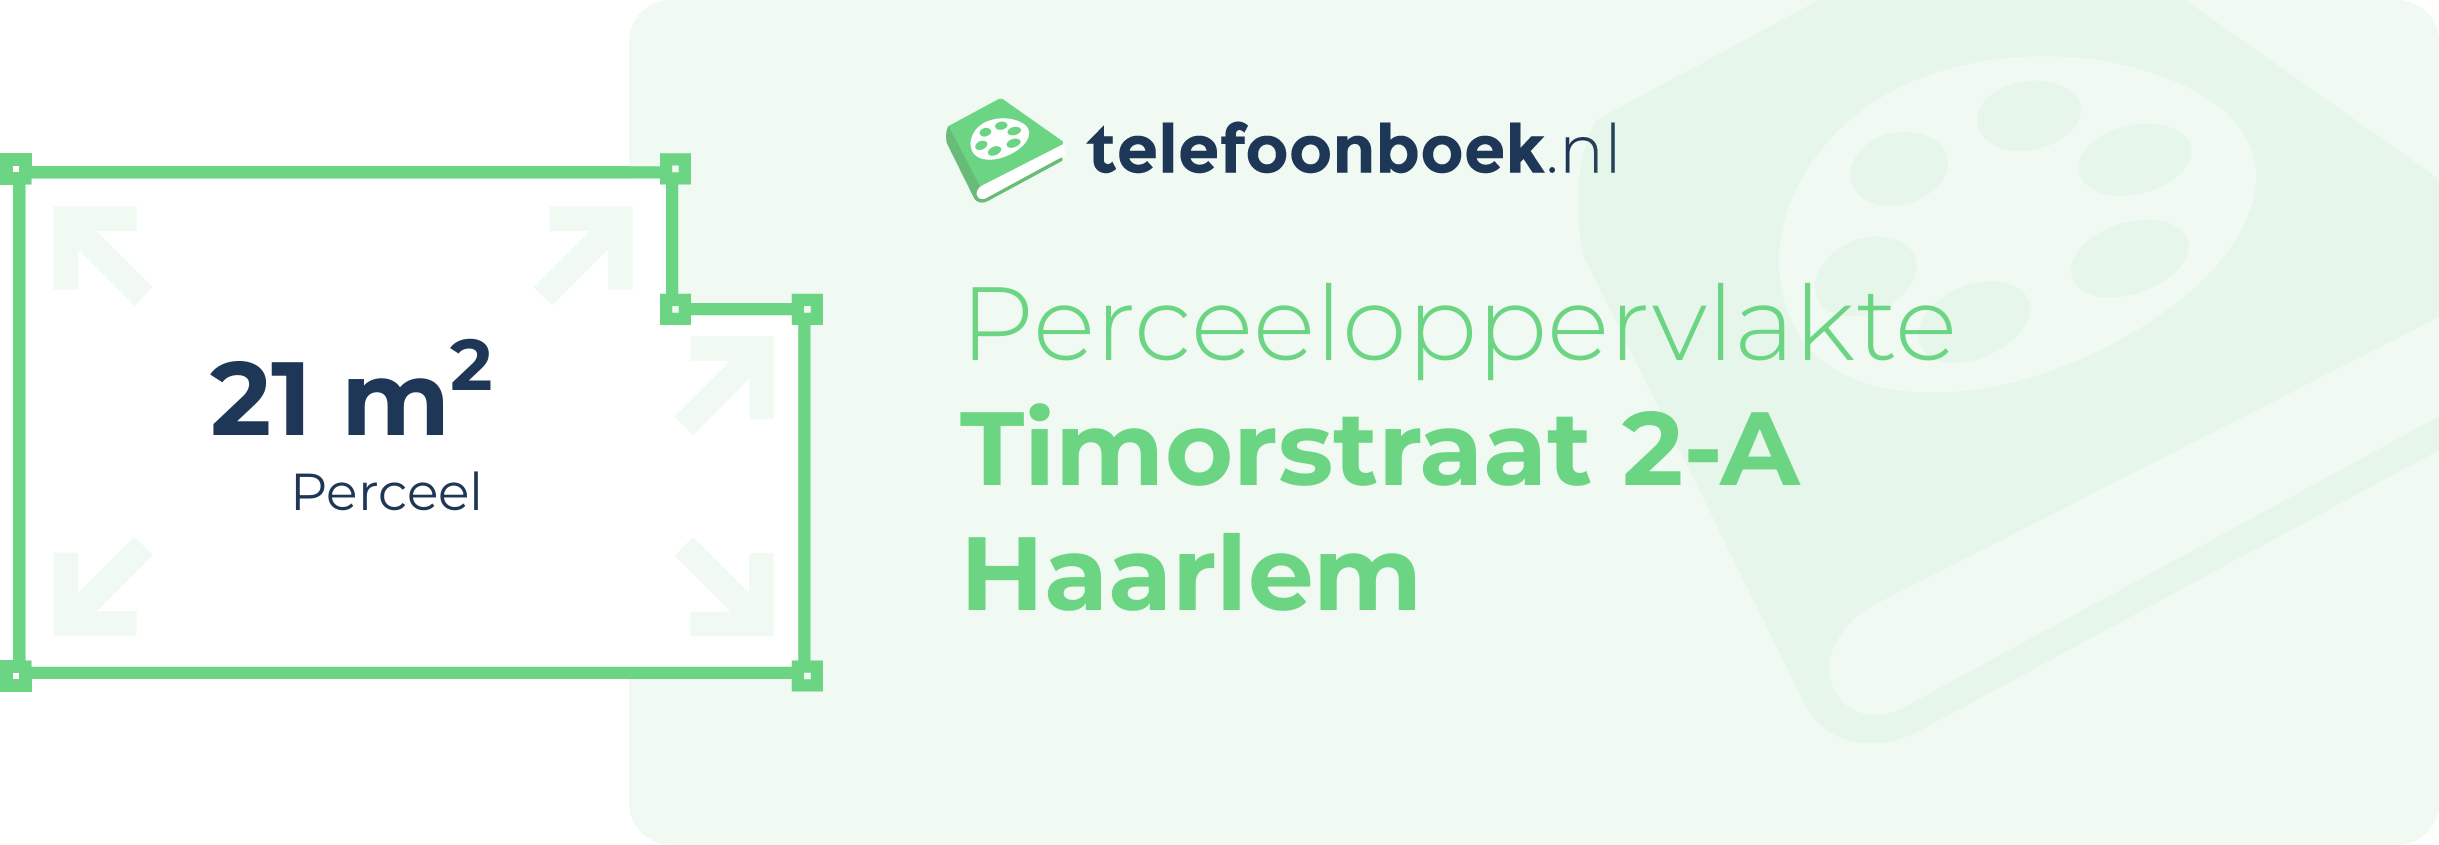 Perceeloppervlakte Timorstraat 2-A Haarlem